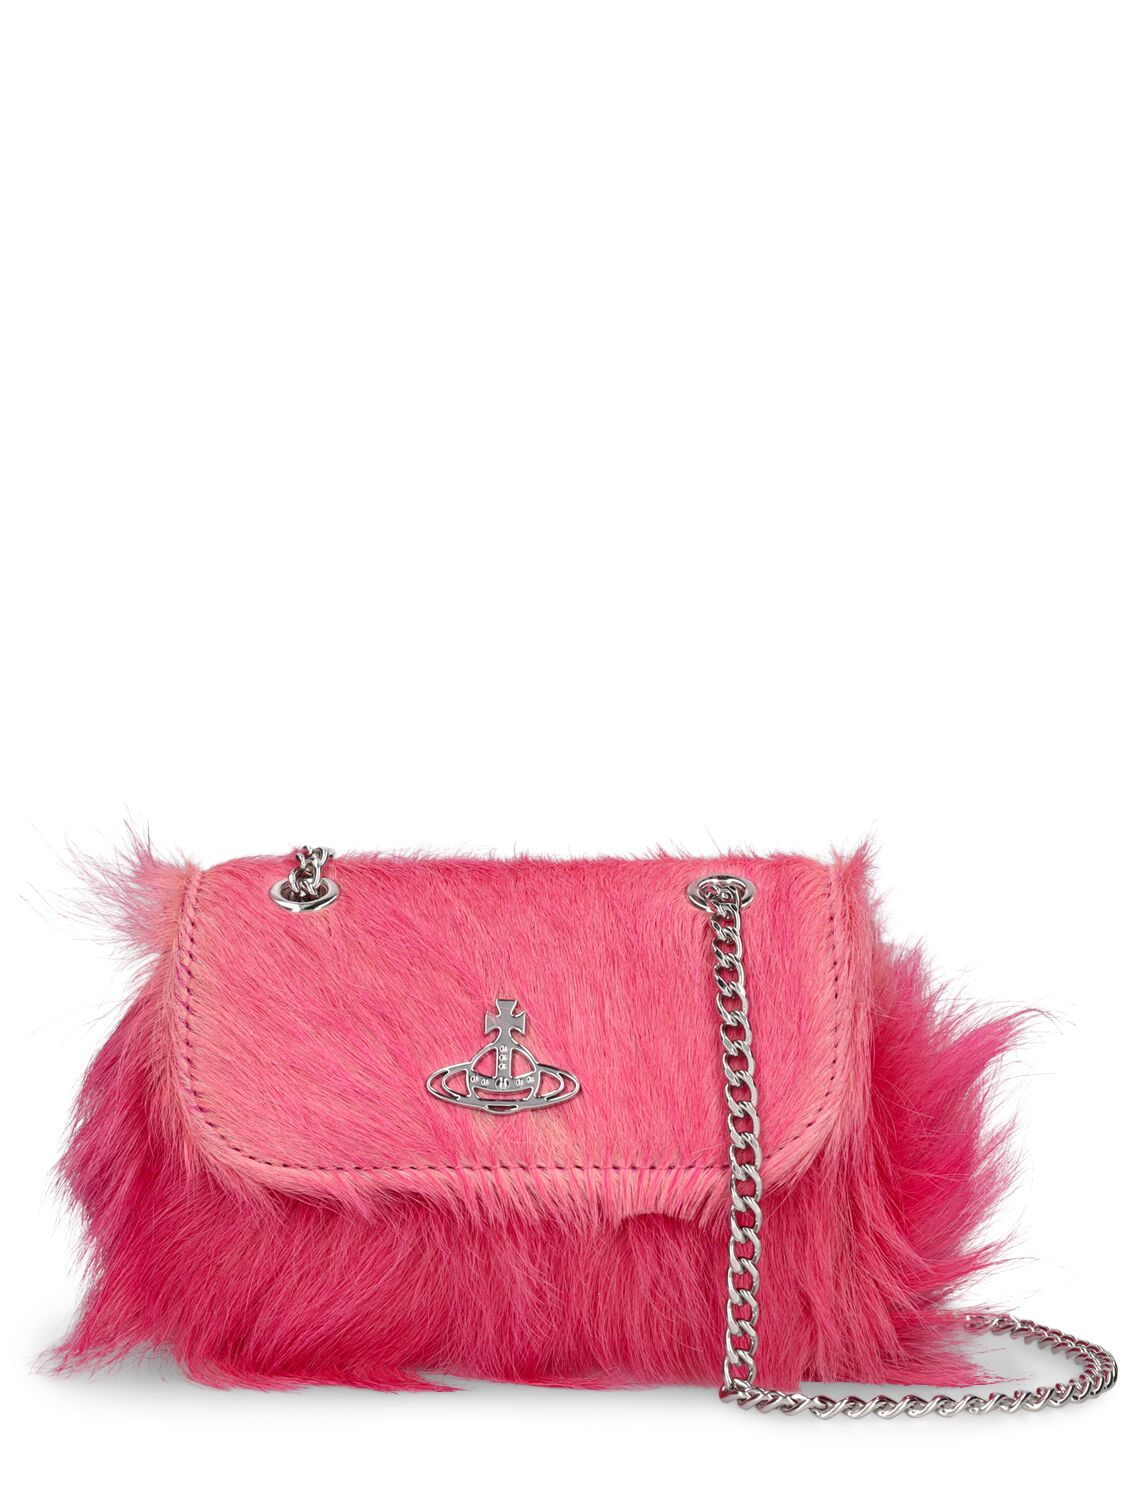 Vivienne Westwood Small Derby Ponyhair Shoulder Bag In Pink